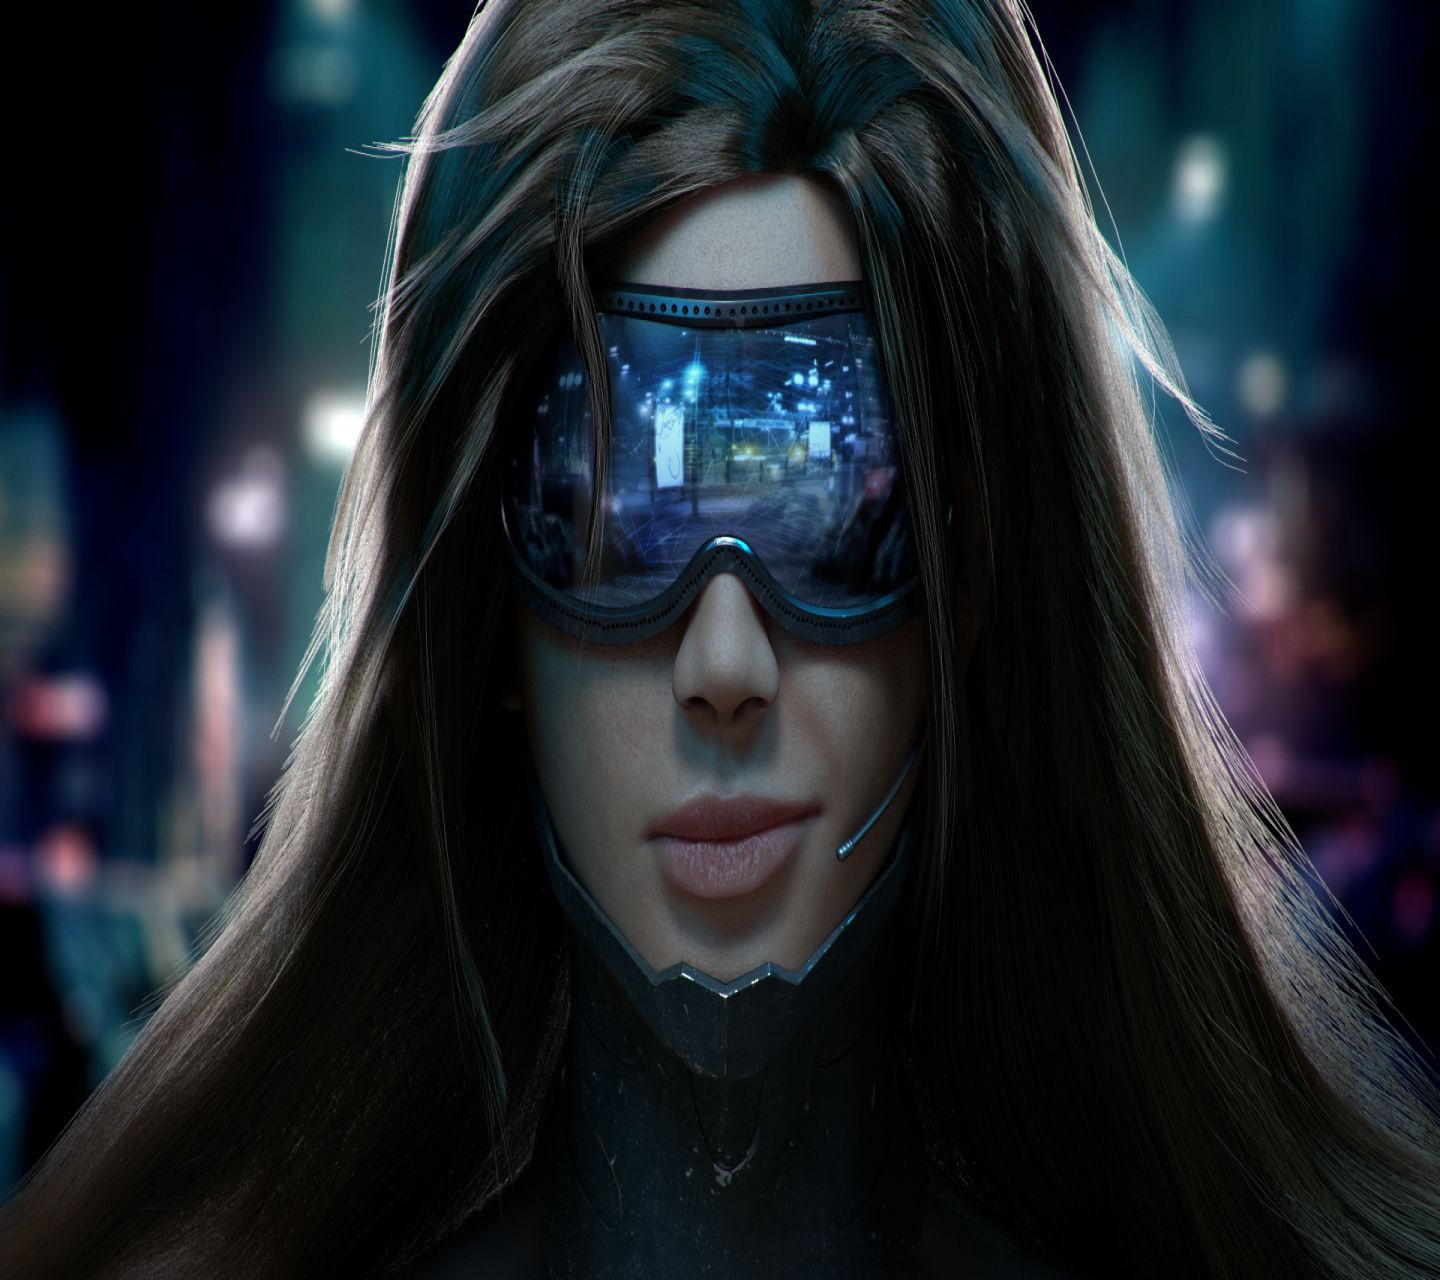 1192906 descargar imagen ciencia ficción, ciberpunk 2077, ciberpunk: fondos de pantalla y protectores de pantalla gratis